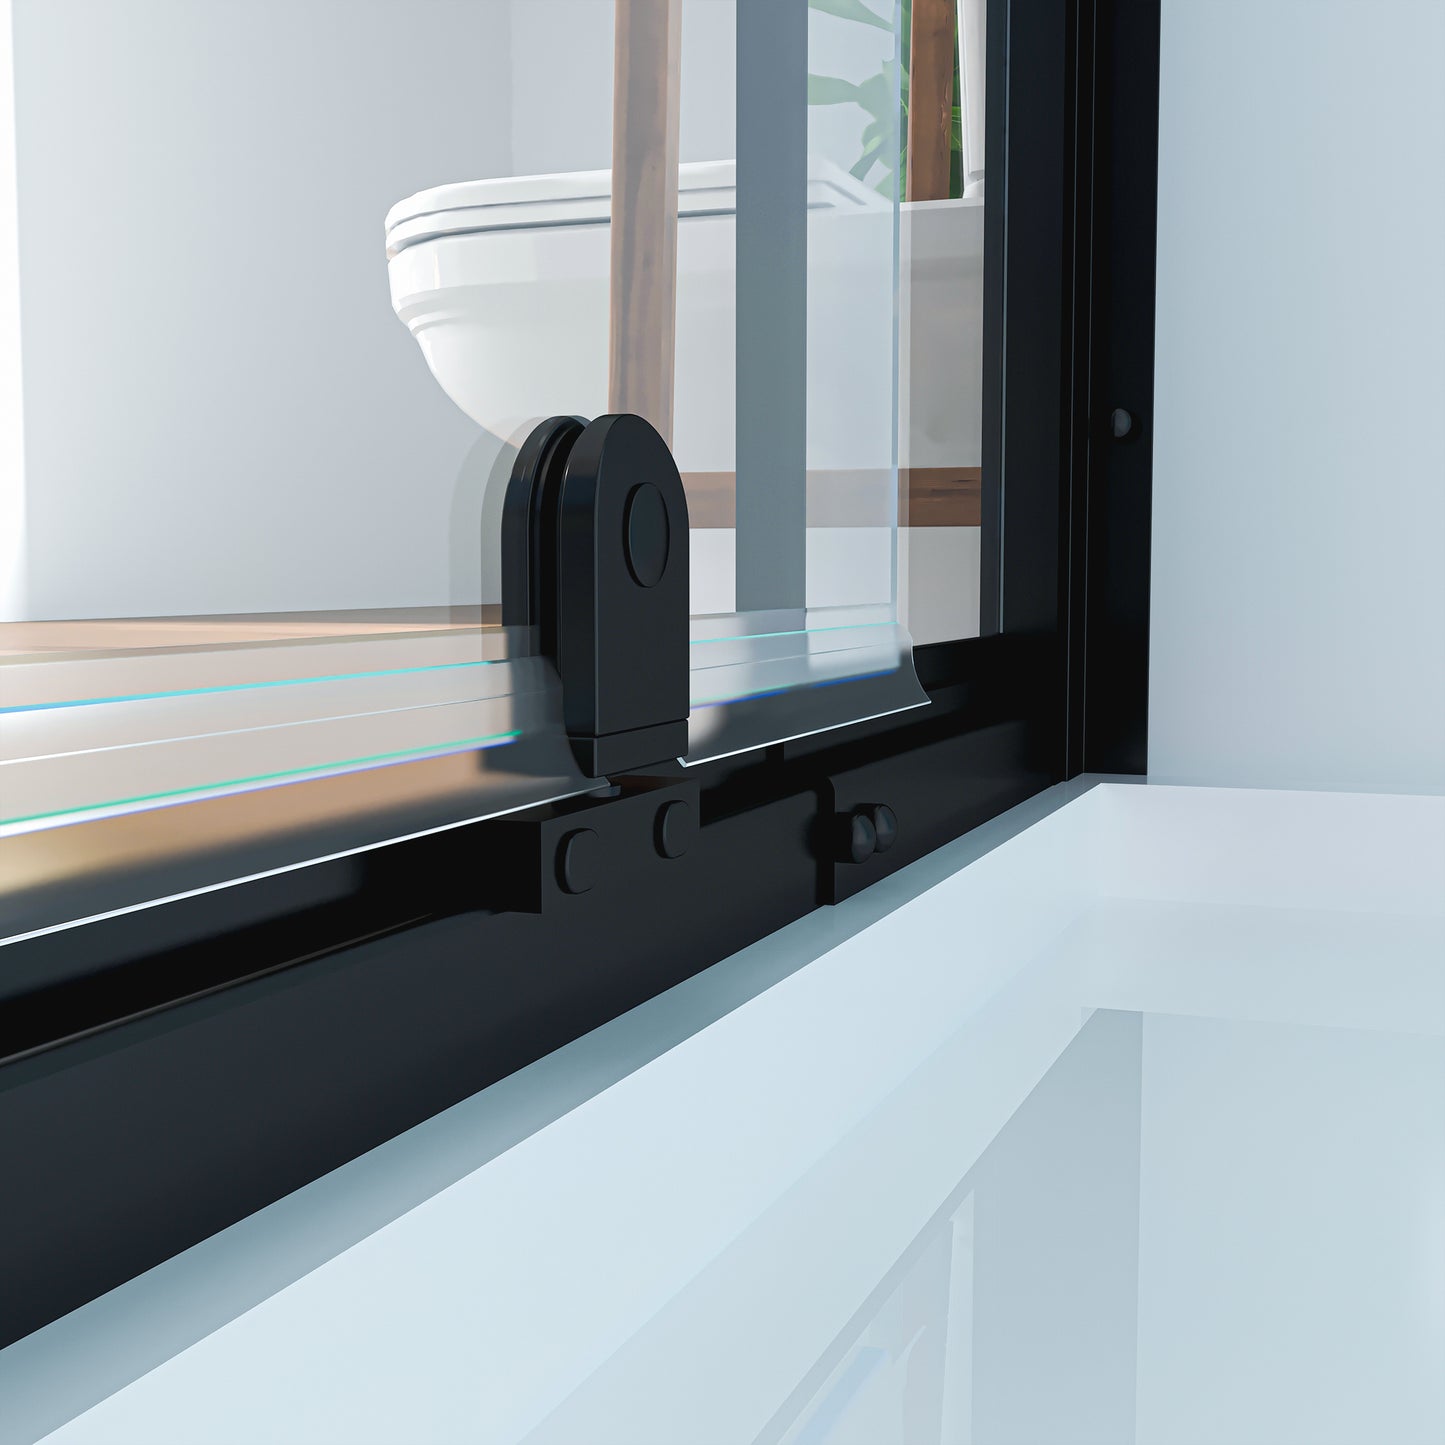 Waterper® 28 in. to 32 in. W x 72 in. H Framed Pivot Shower Door in Black with Clear Glass